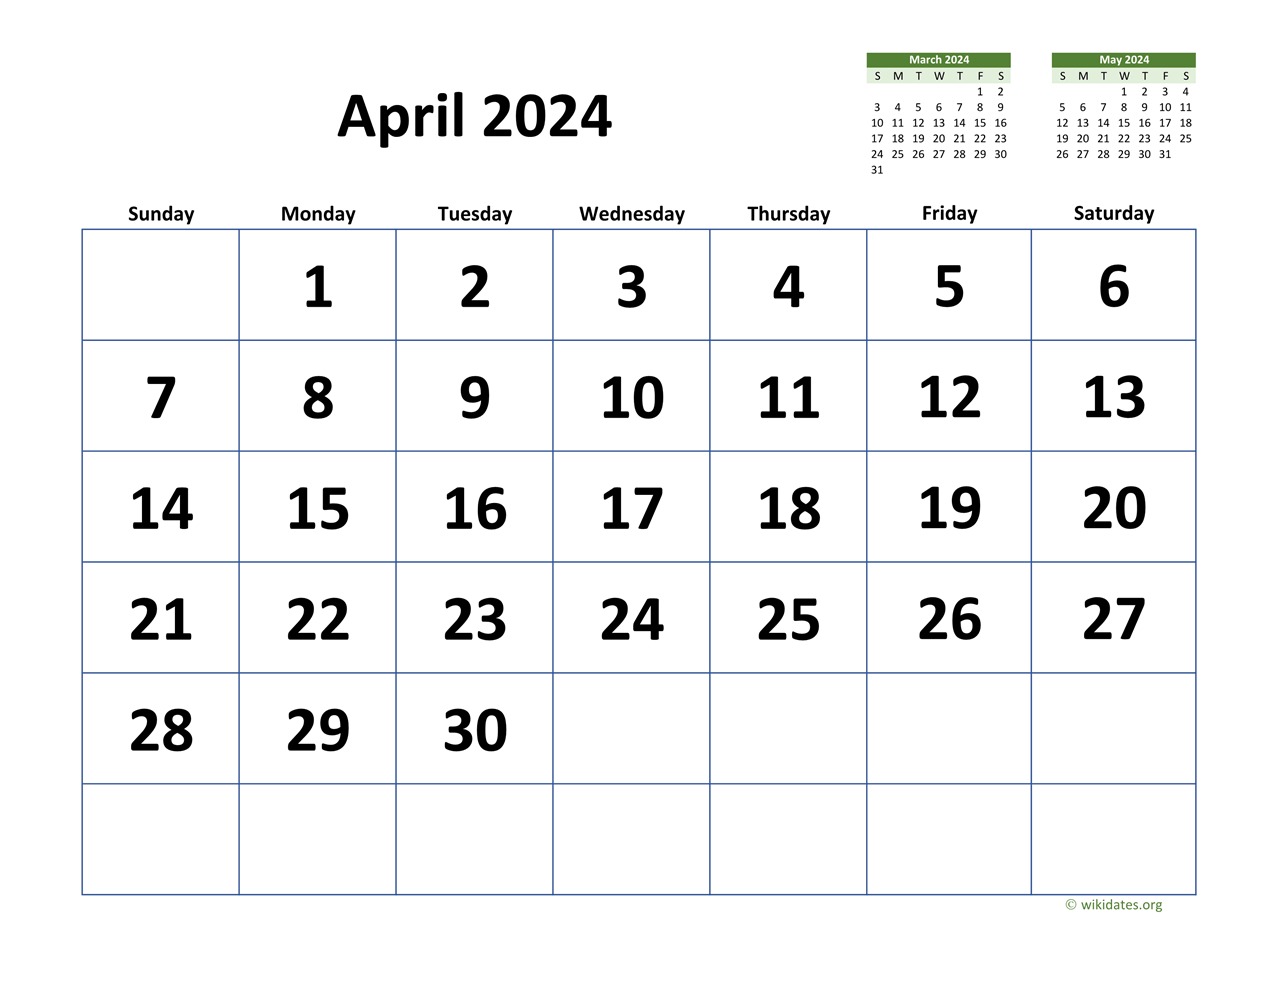 April 2024 Calendar with Extralarge Dates